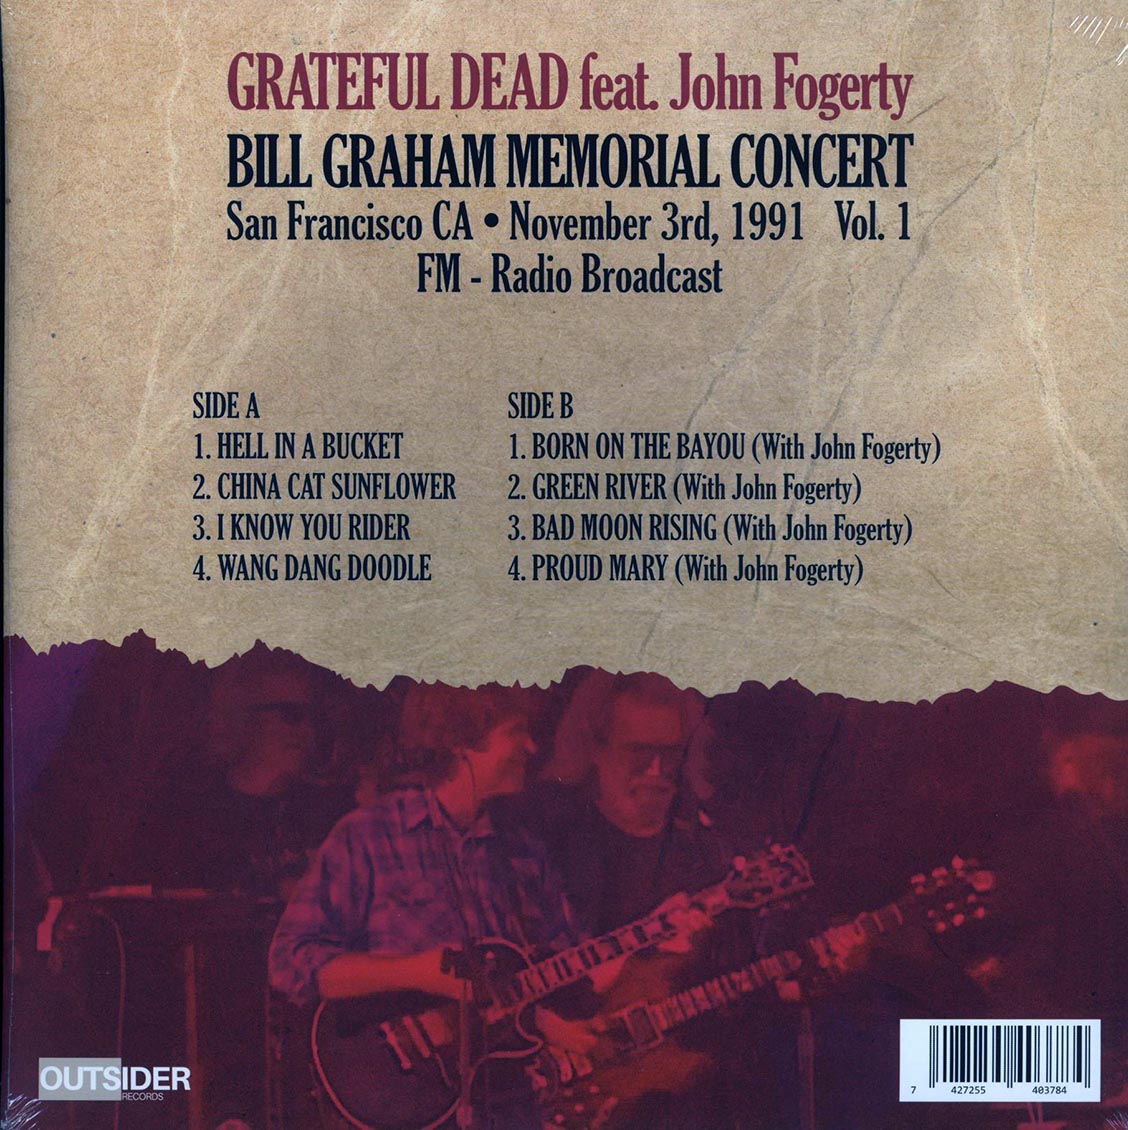 Grateful Dead, John Fogerty - Bill Graham Memorial Concert Volume 1: San Francisco CA, November 3rd, 1991 (red vinyl) - Vinyl LP, LP